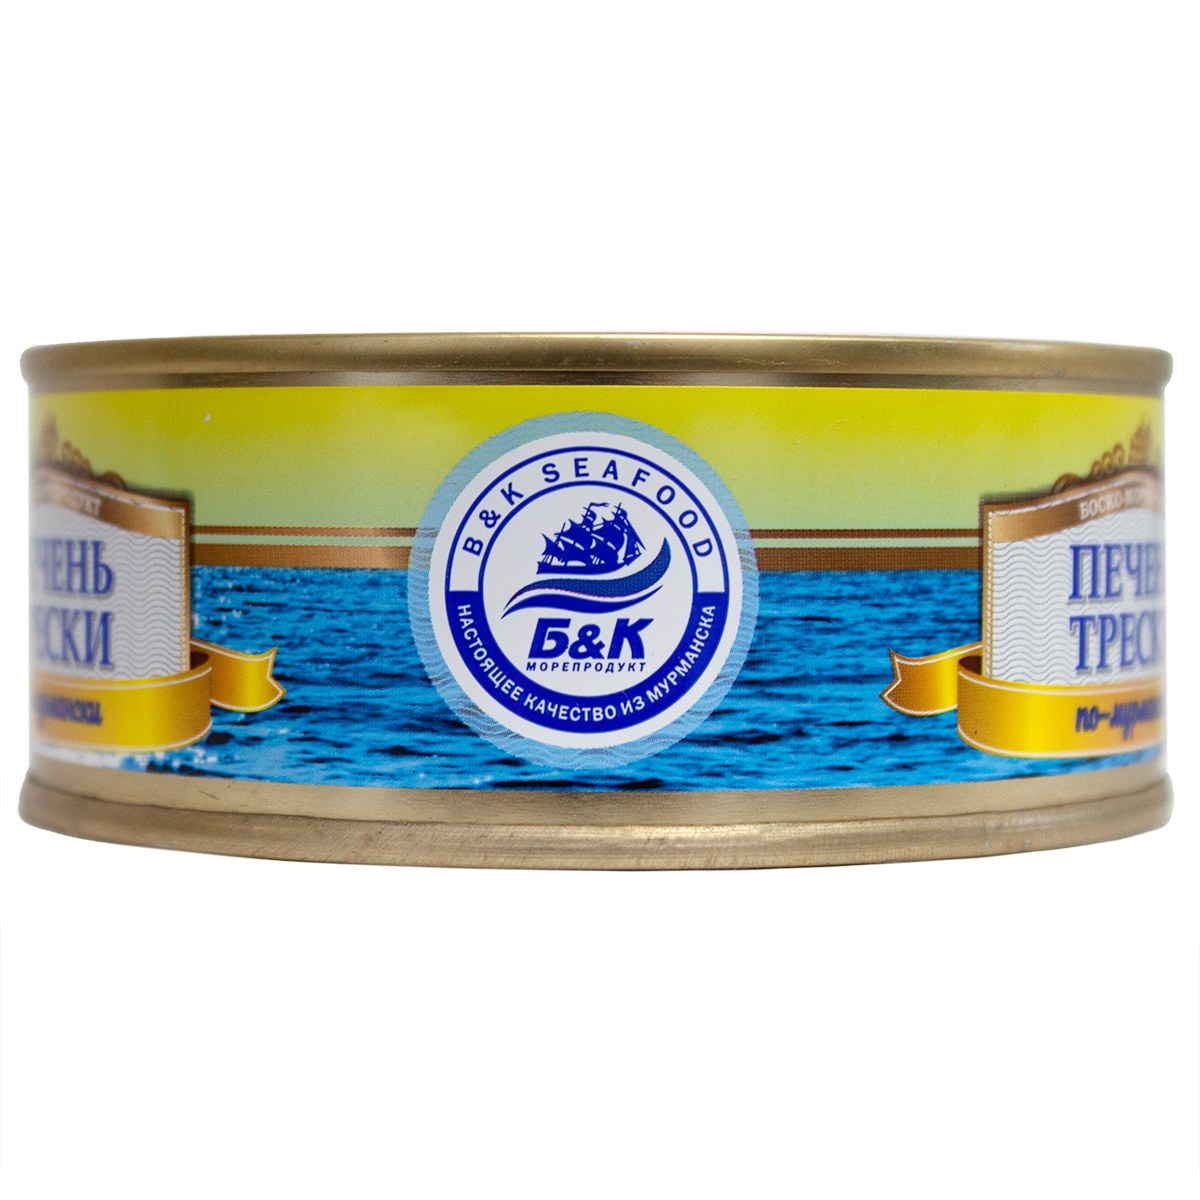    B&K Seafood -, 240  ( &K Seafood .00074.00.00)